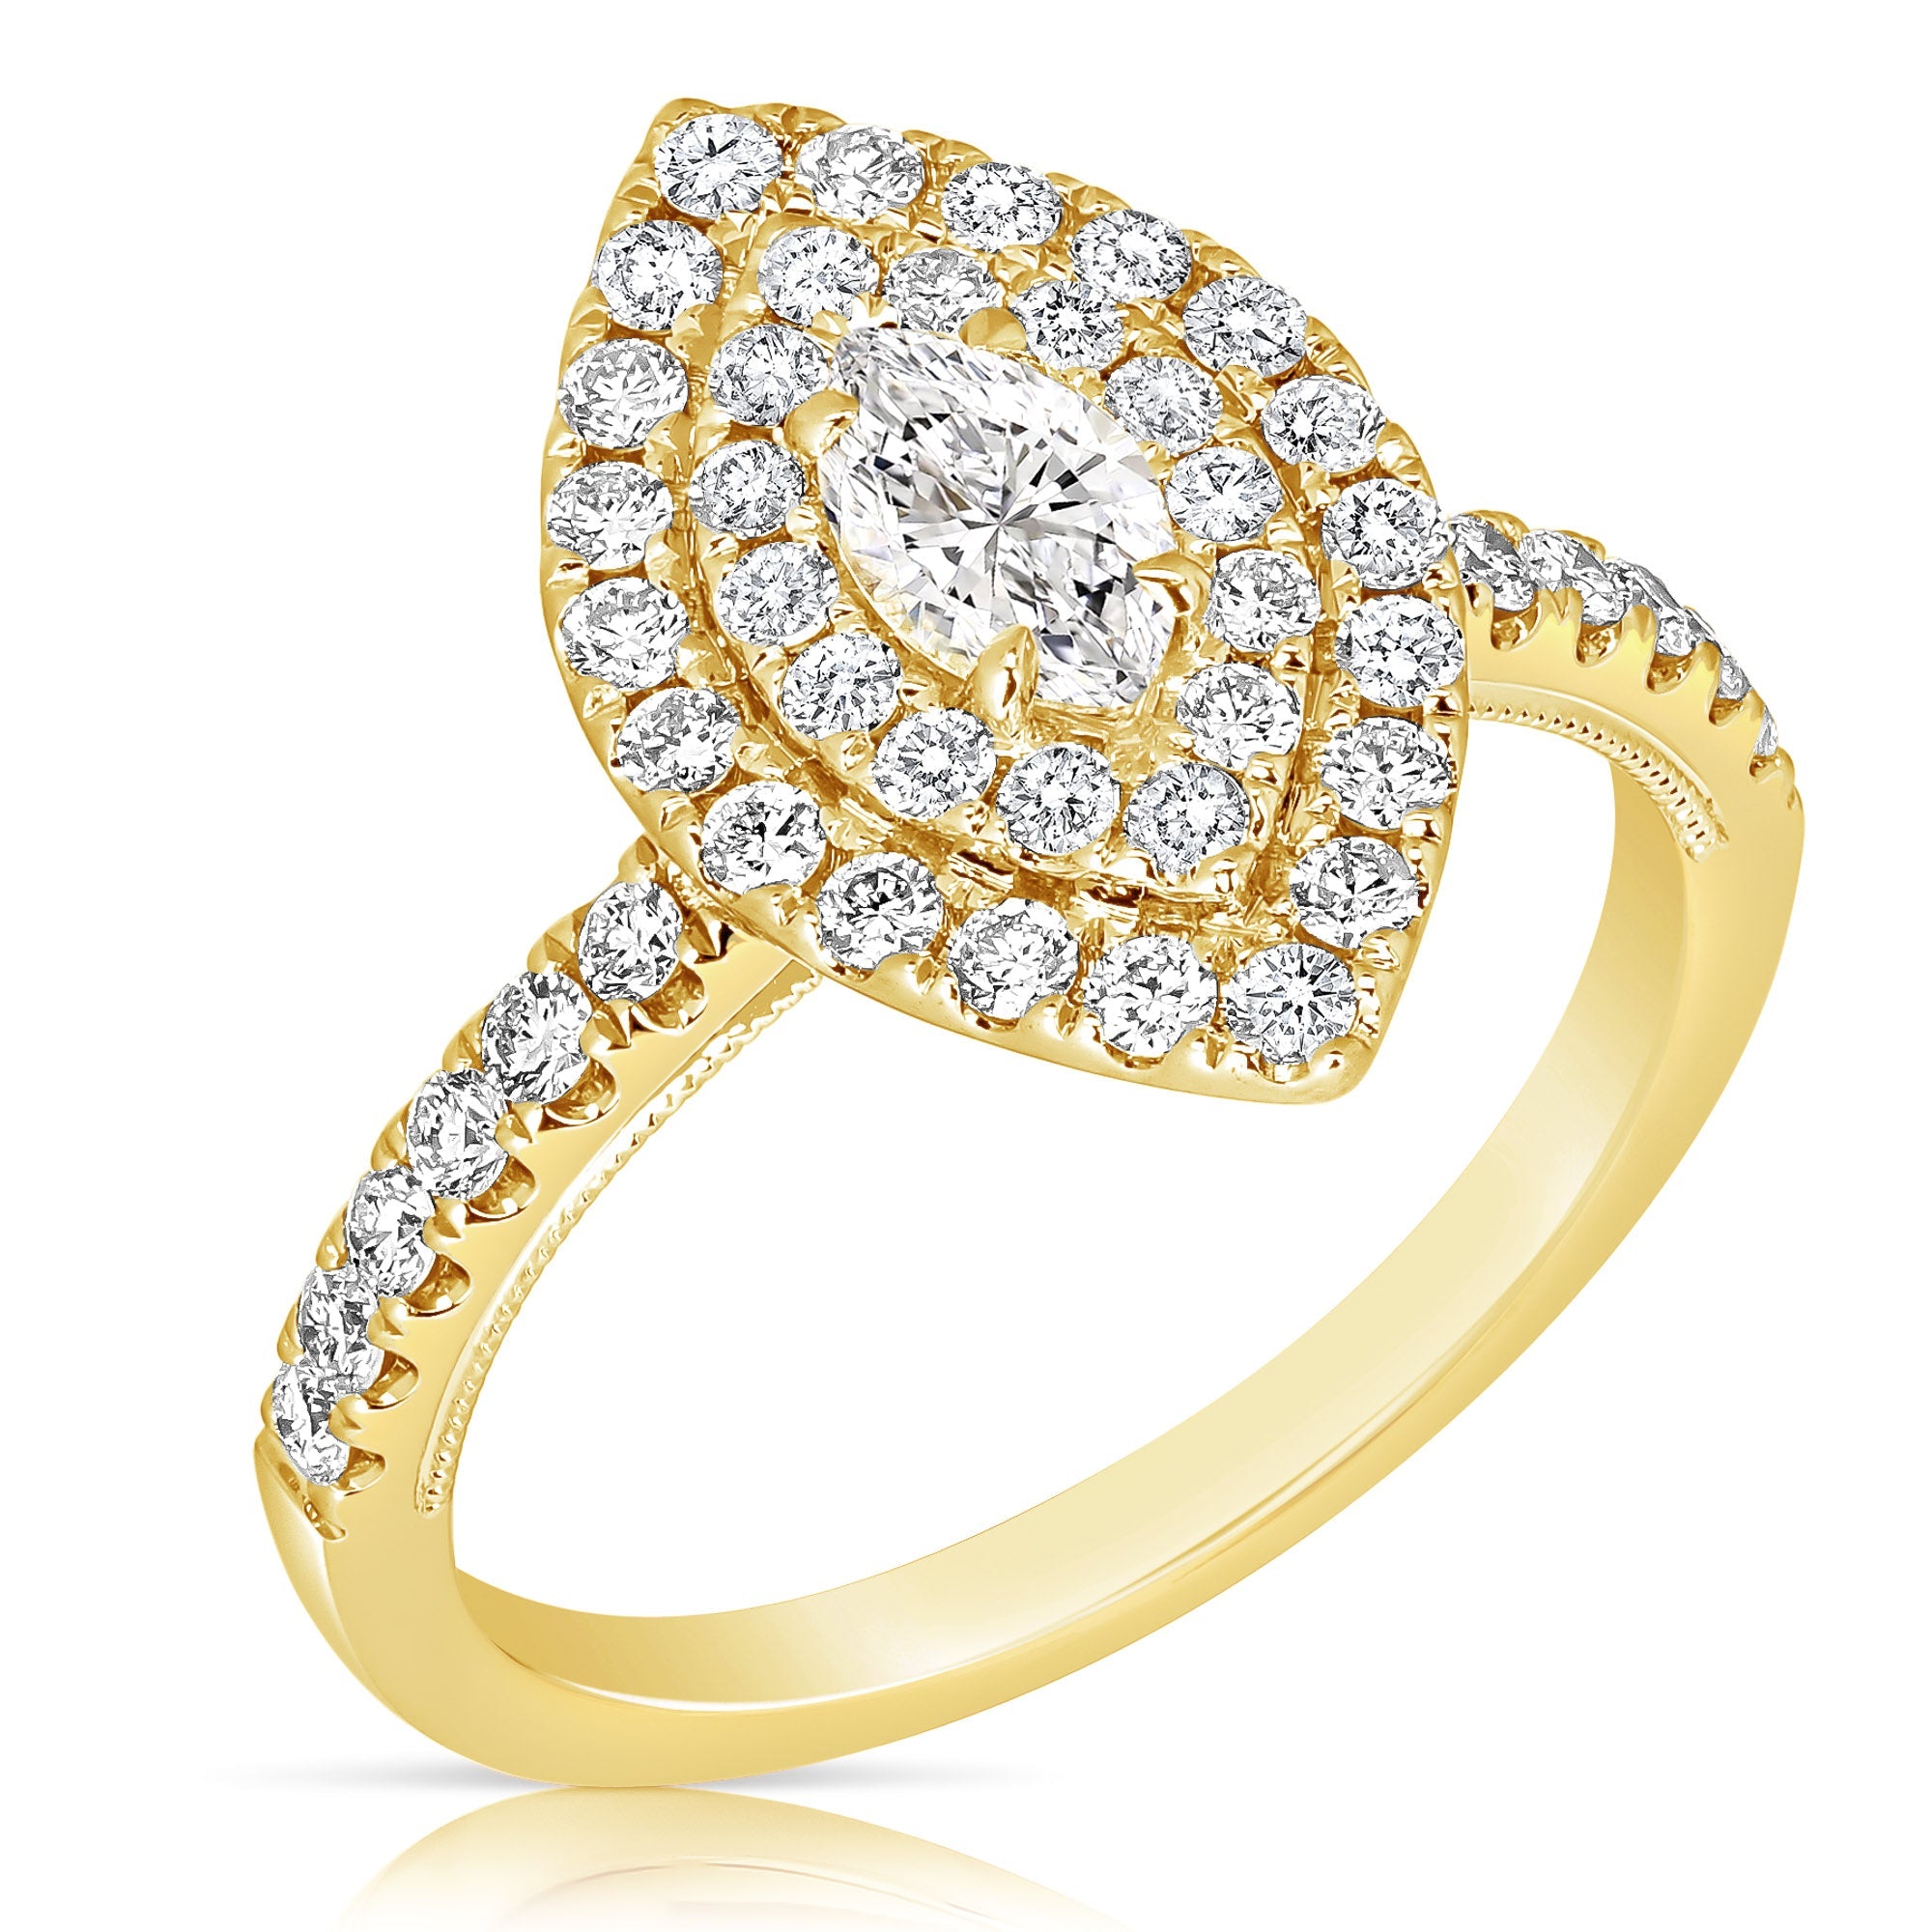 999.9 (24k) Pure Gold Diamond Cut Shiny Band Ring 6.94 Grams. Adjustable  Size | eBay